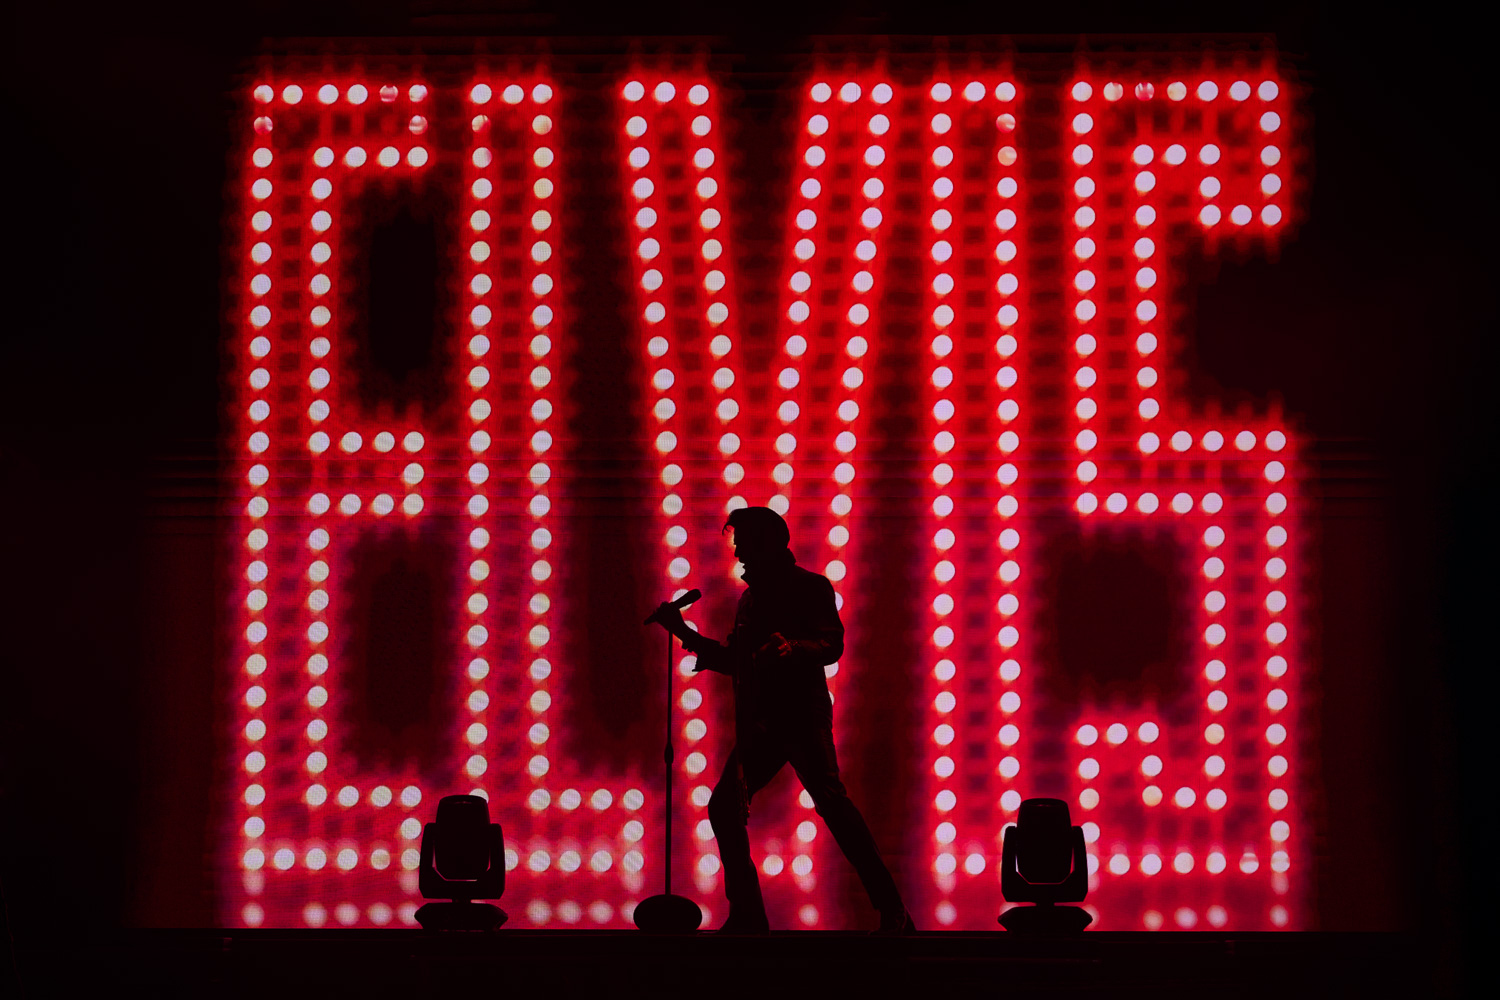 Silhouette of Dean Z performing as Elvis Presley in front of big red light letters spelling Elvis.